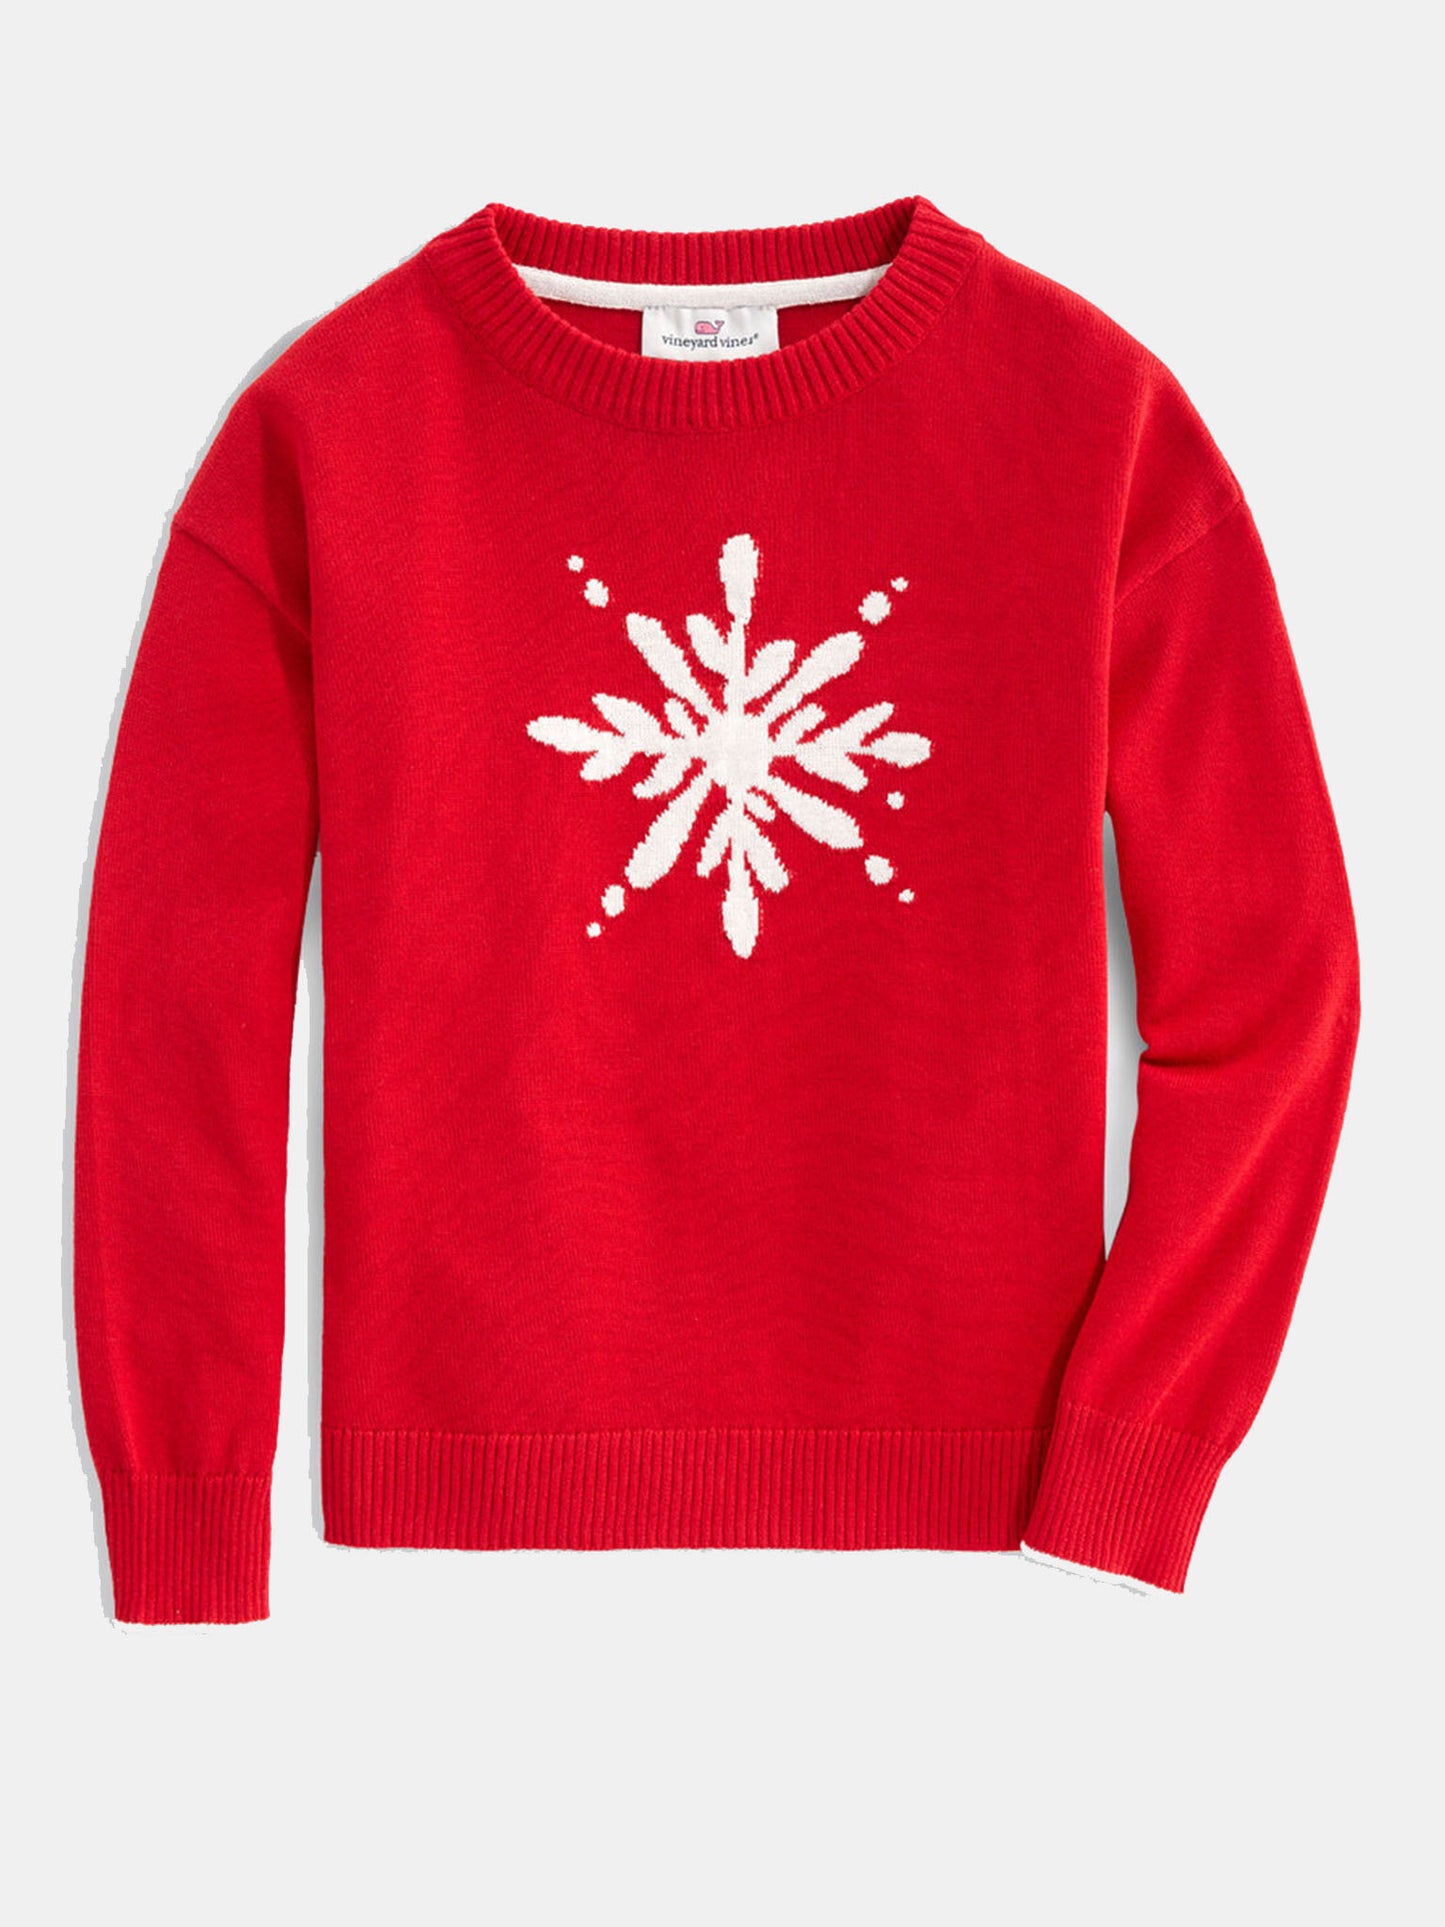 Vineyard Vines Girls' Snowflake Sweater